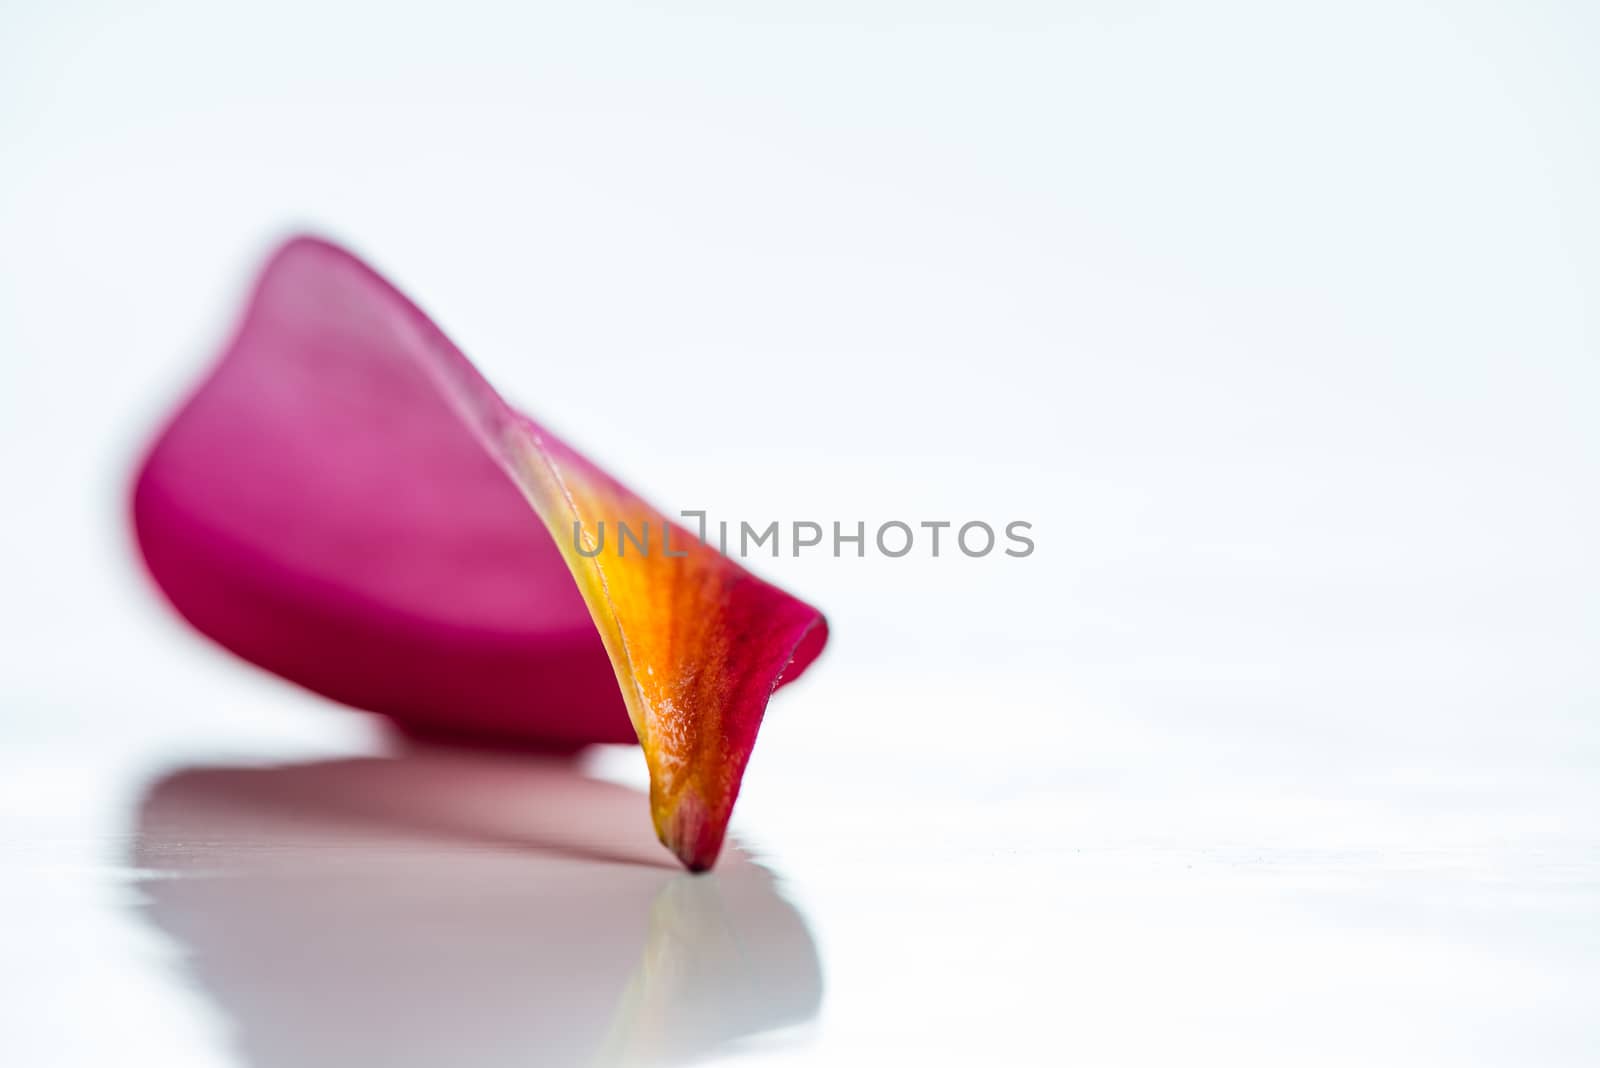 Frangipani flower petal by p.studio66